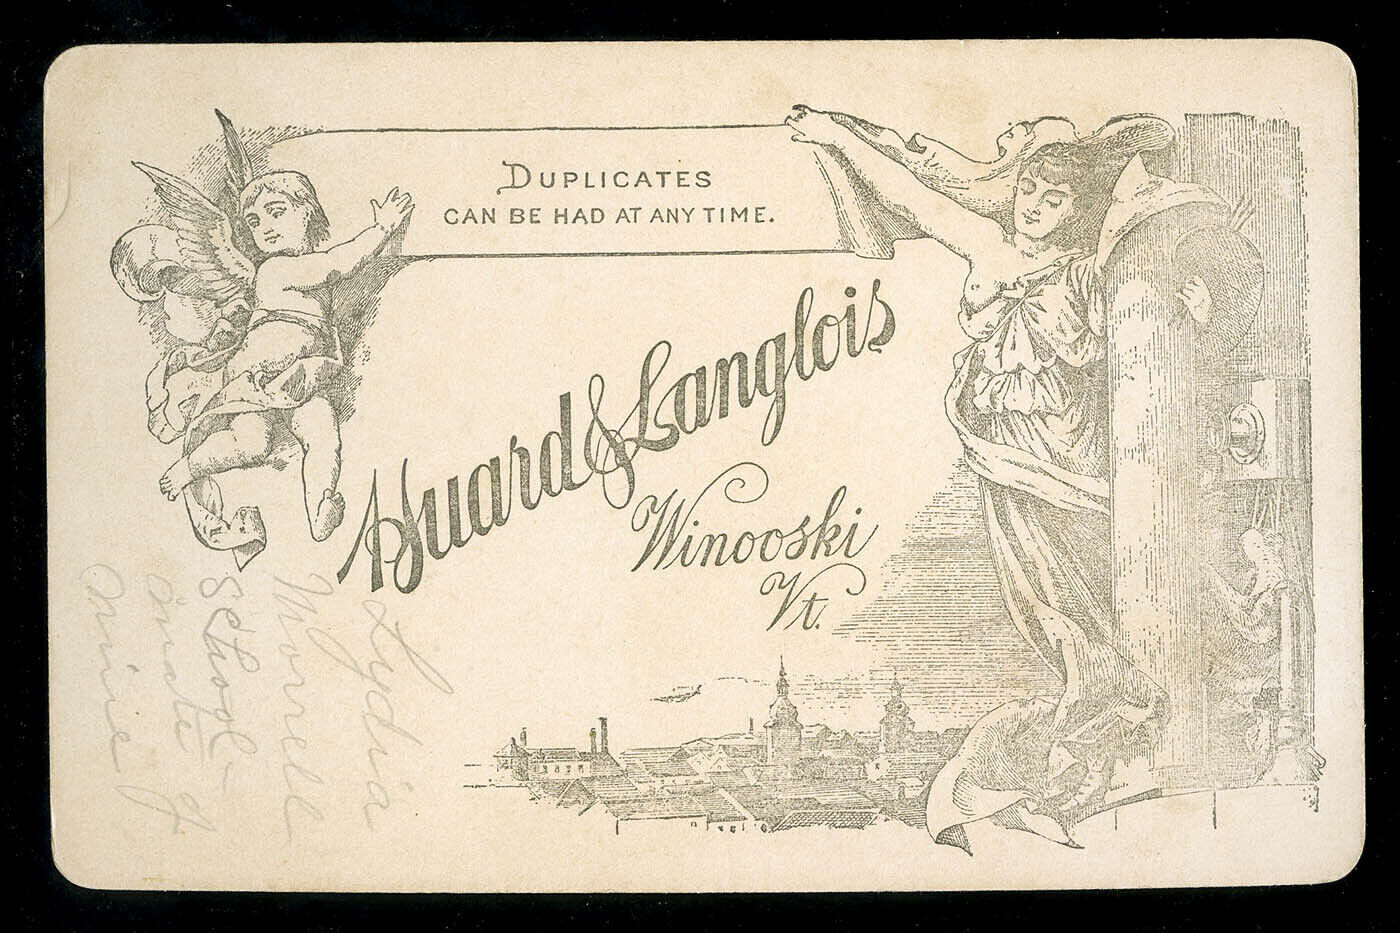 1890s WINOOSKI, VERMONT Cabinet Card Huard & Langlois Photographer - CHERUB LOGO